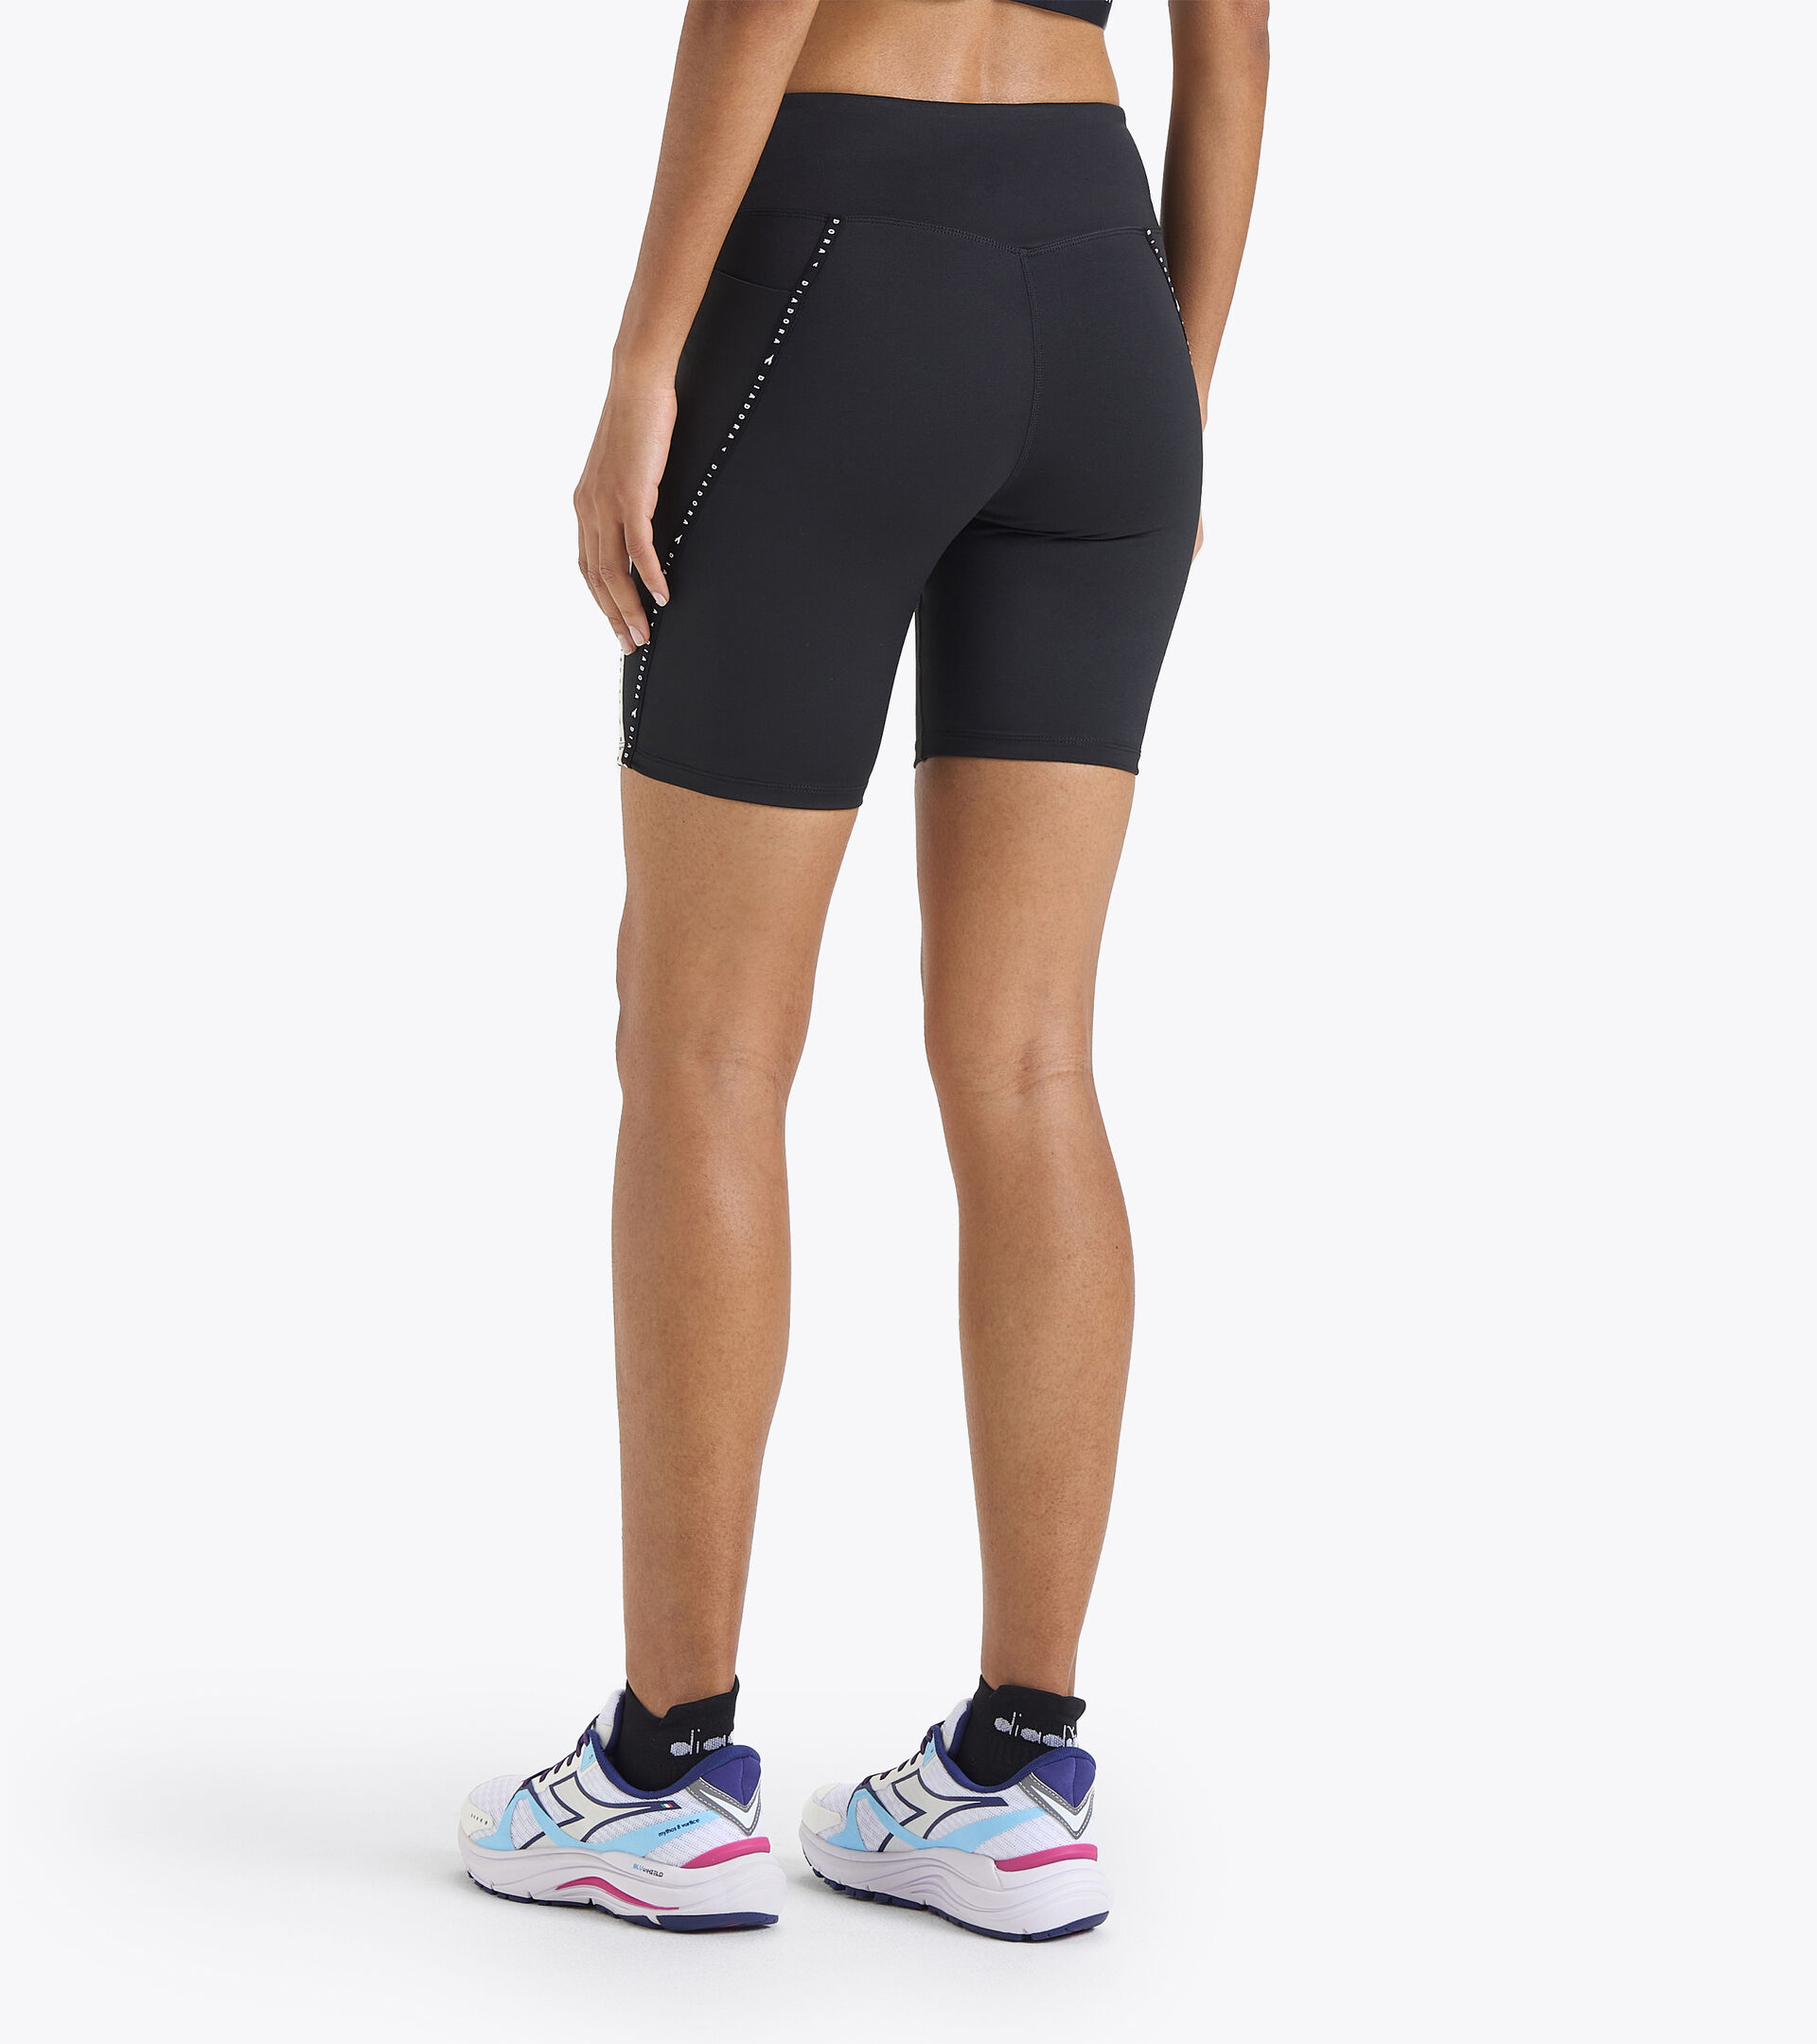 L. TIGHTS BE ONE Running shorts - Women - Diadora Online Store CA